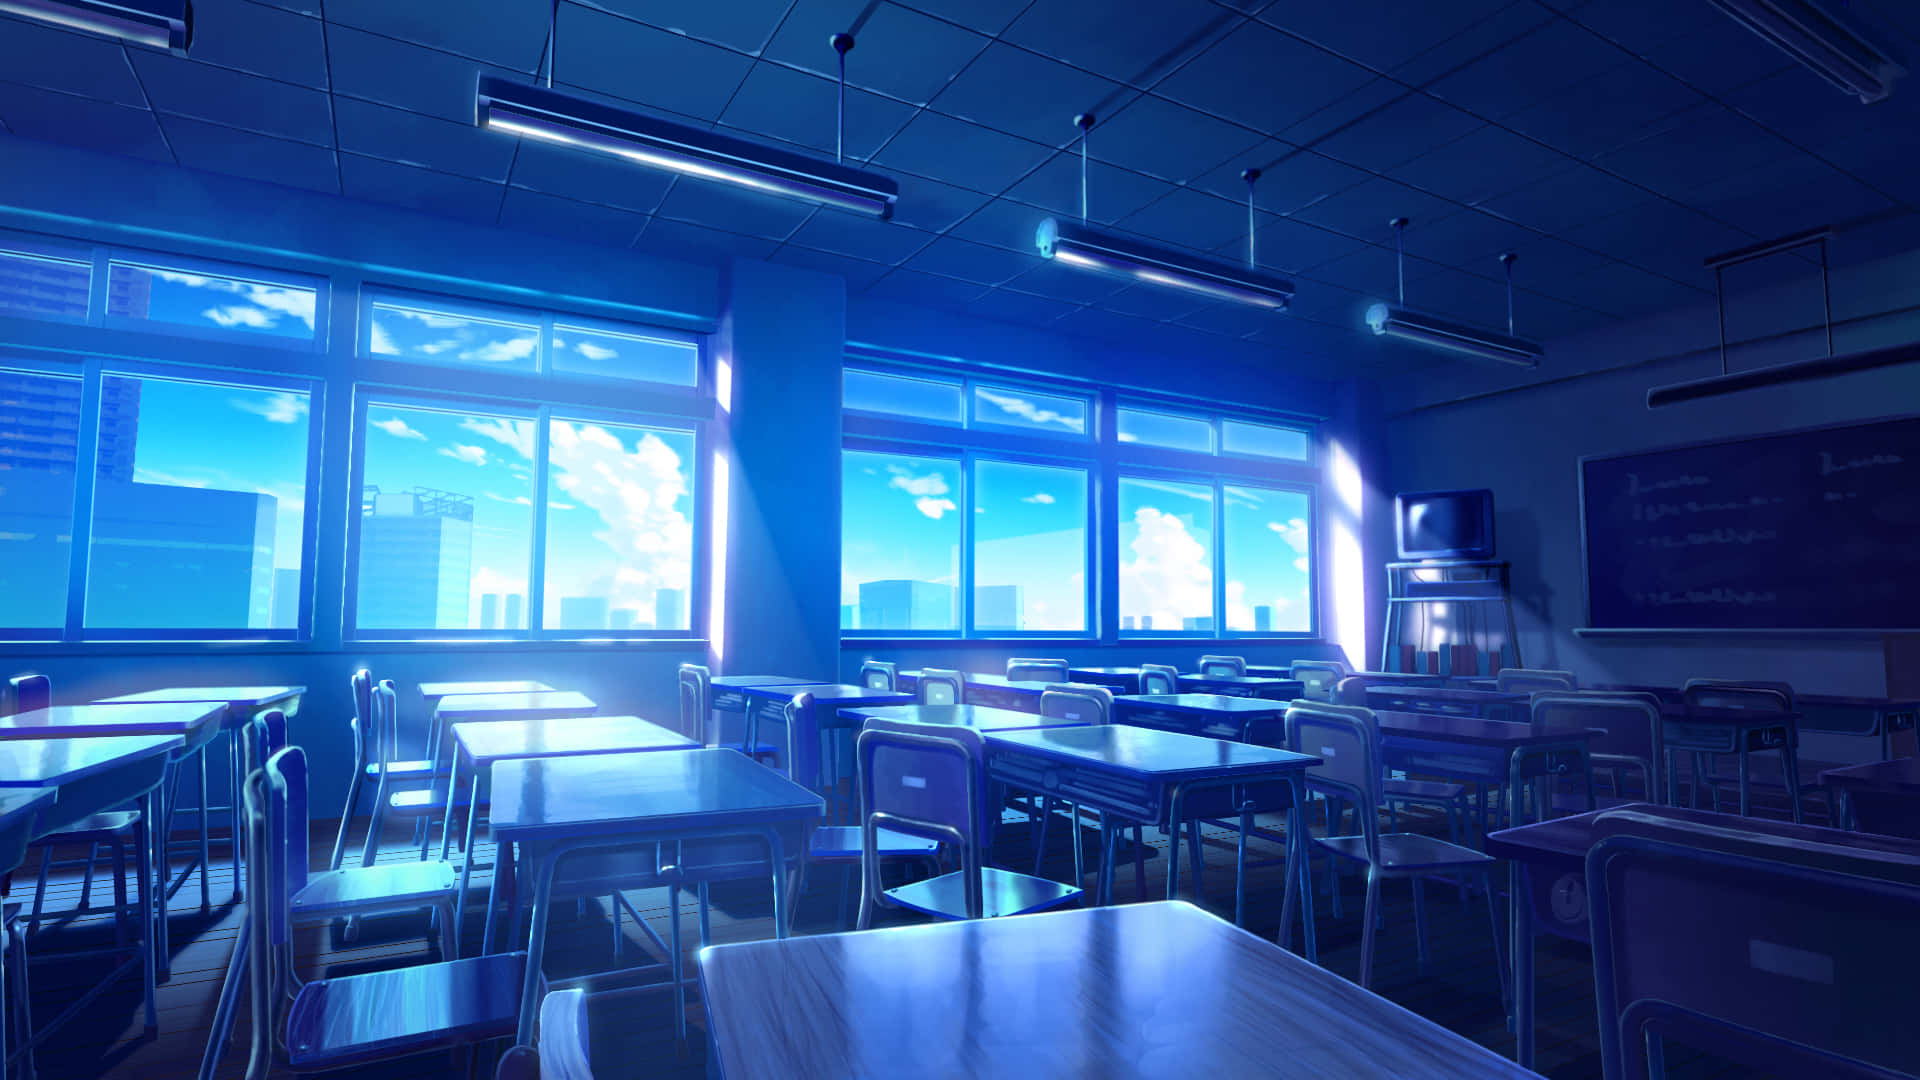 Blue Anime Empty Japanese Classroom Background